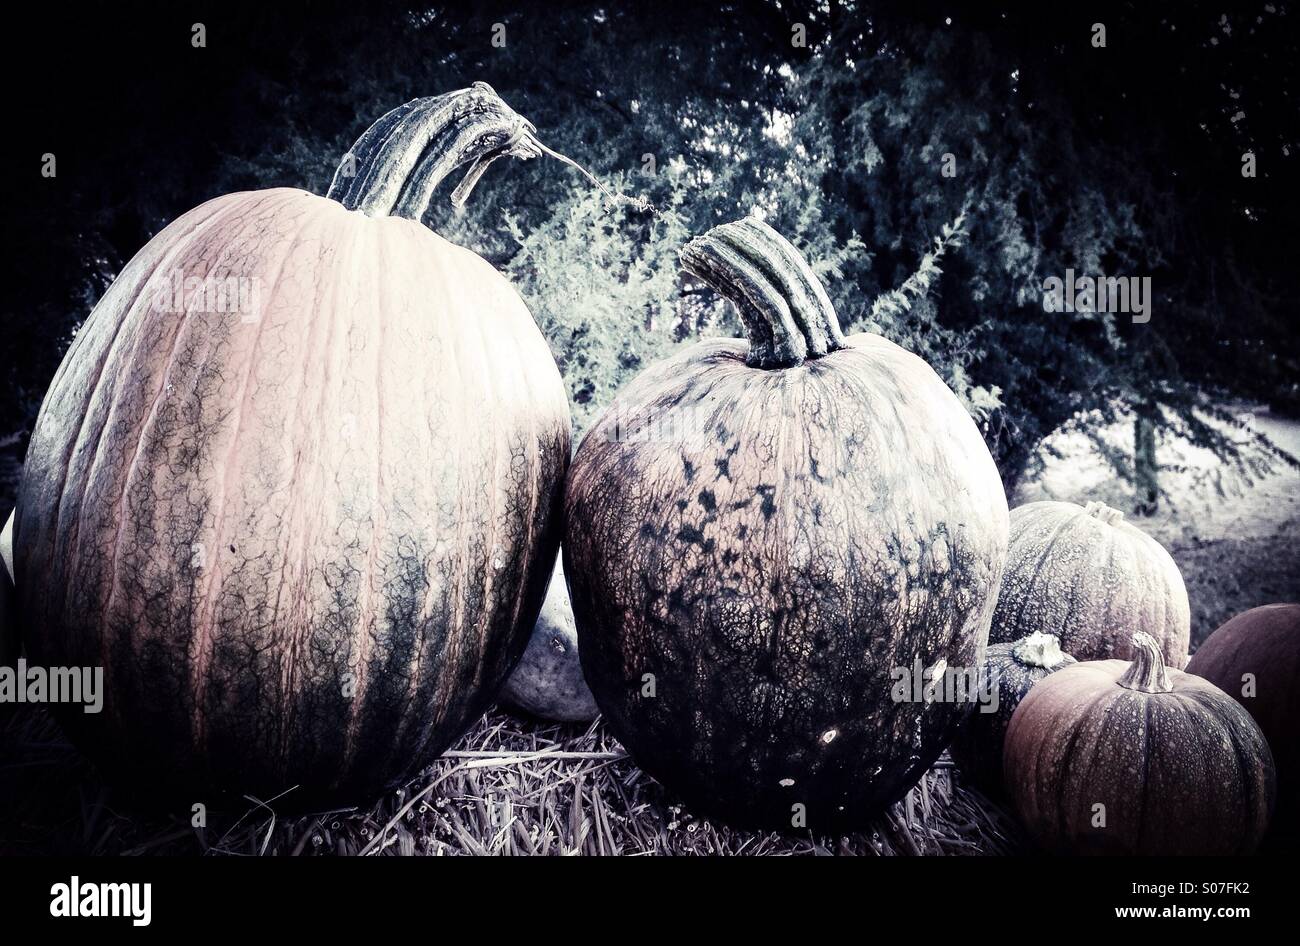 Fall pumpkins. Stock Photo